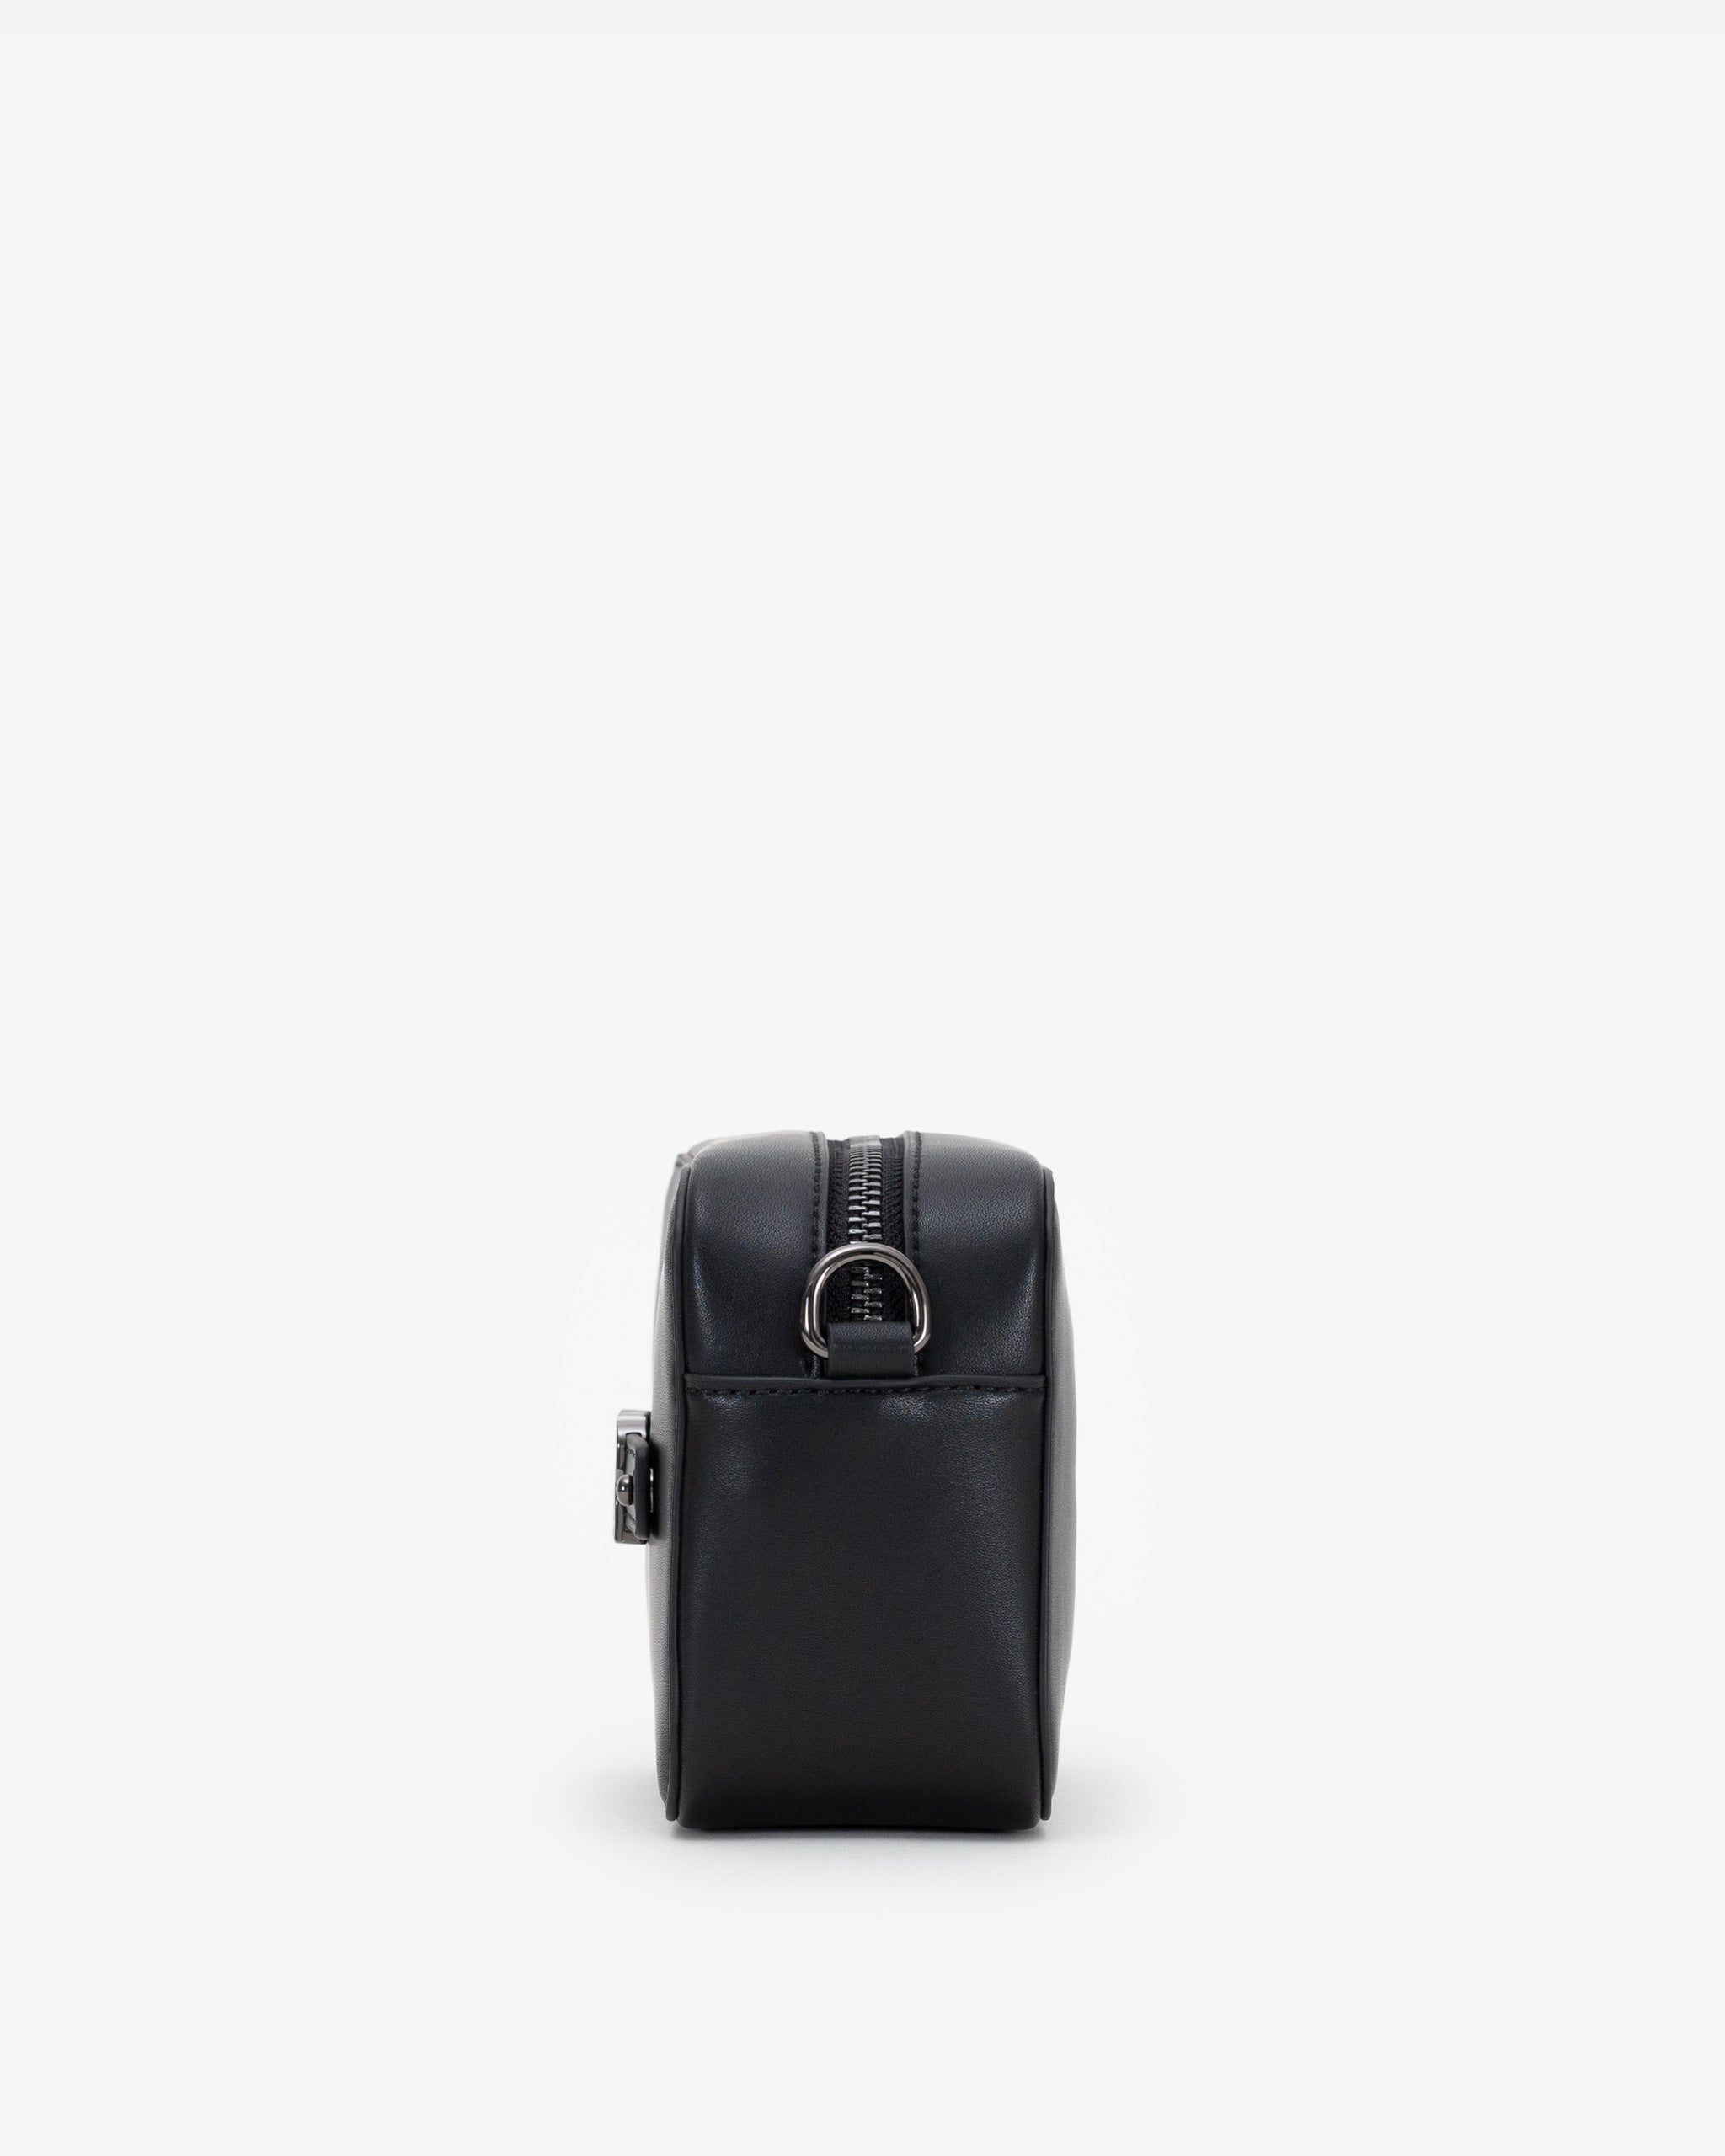 Zip Crossbody Bag in Black/Gunmetal with Personalised Hardware